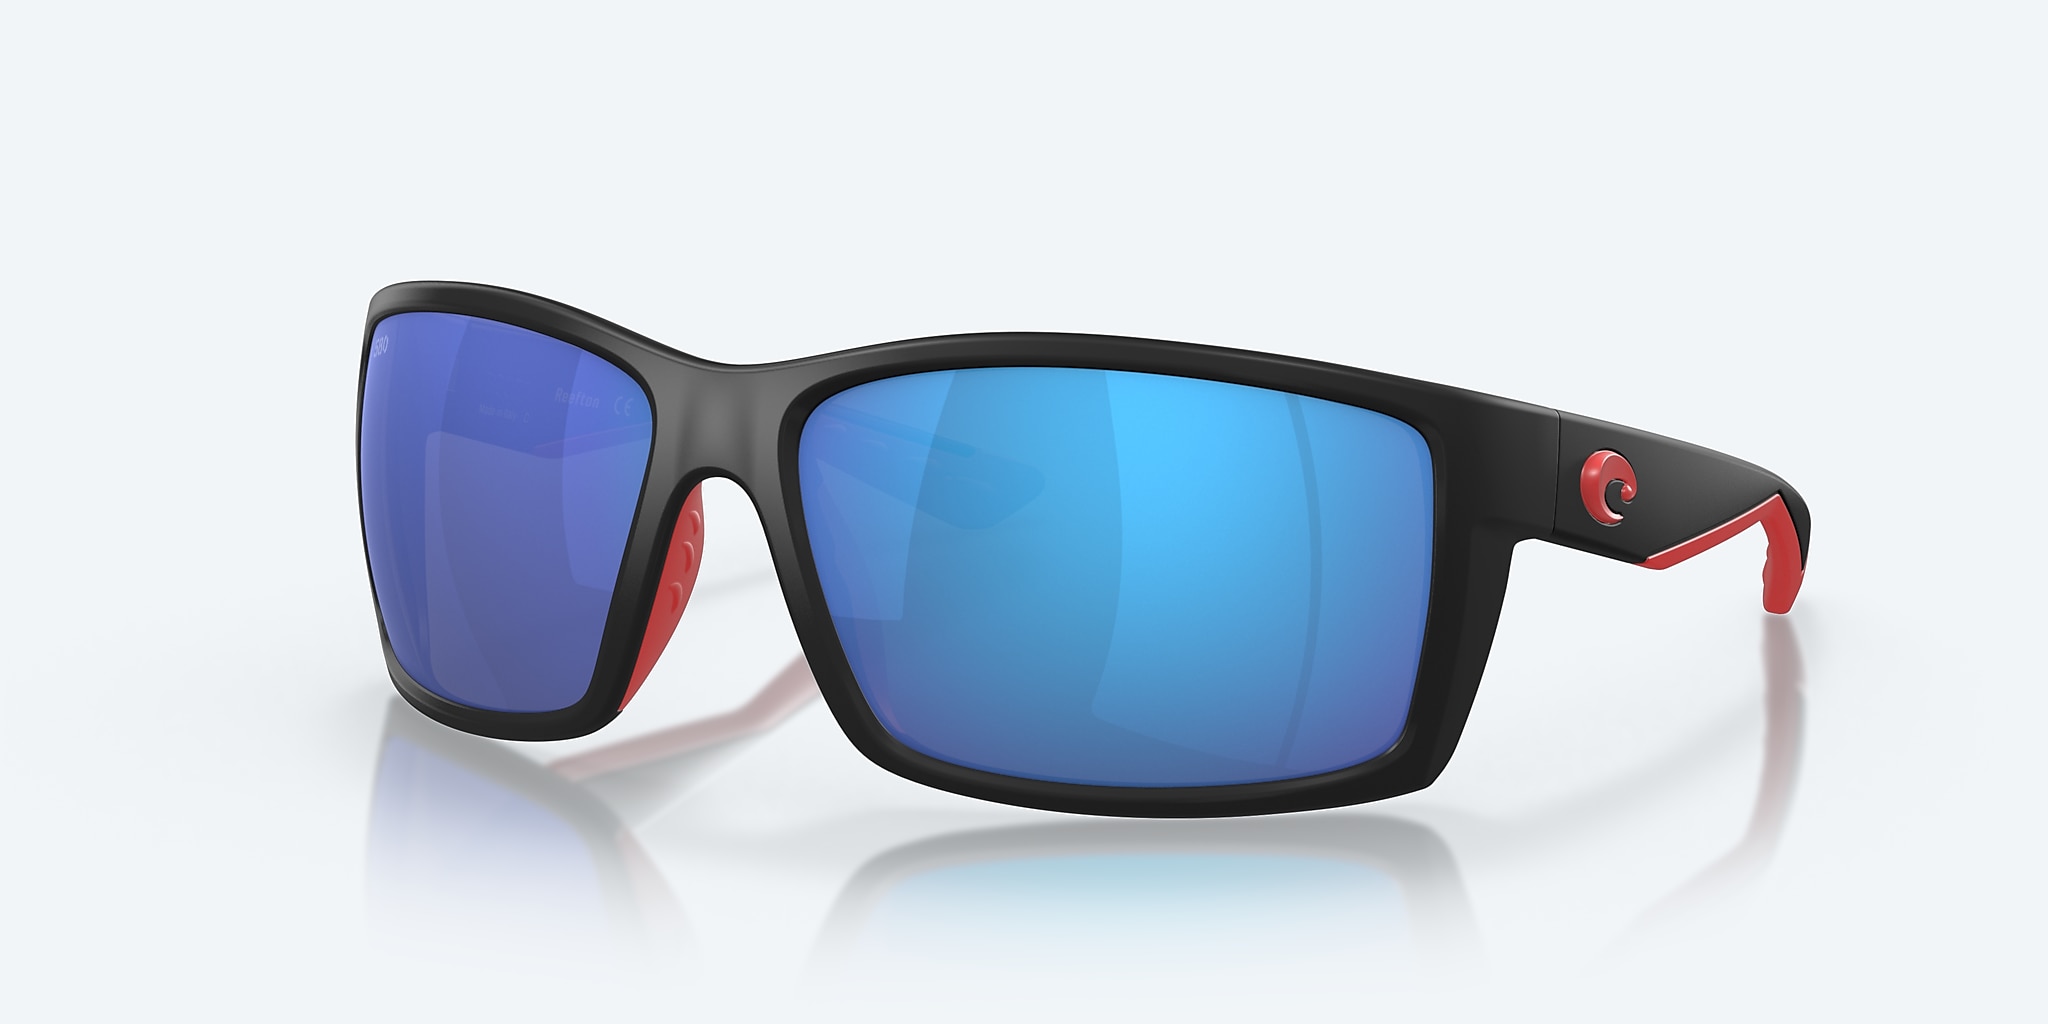 Reefton Polarized Sunglasses in Blue Mirror